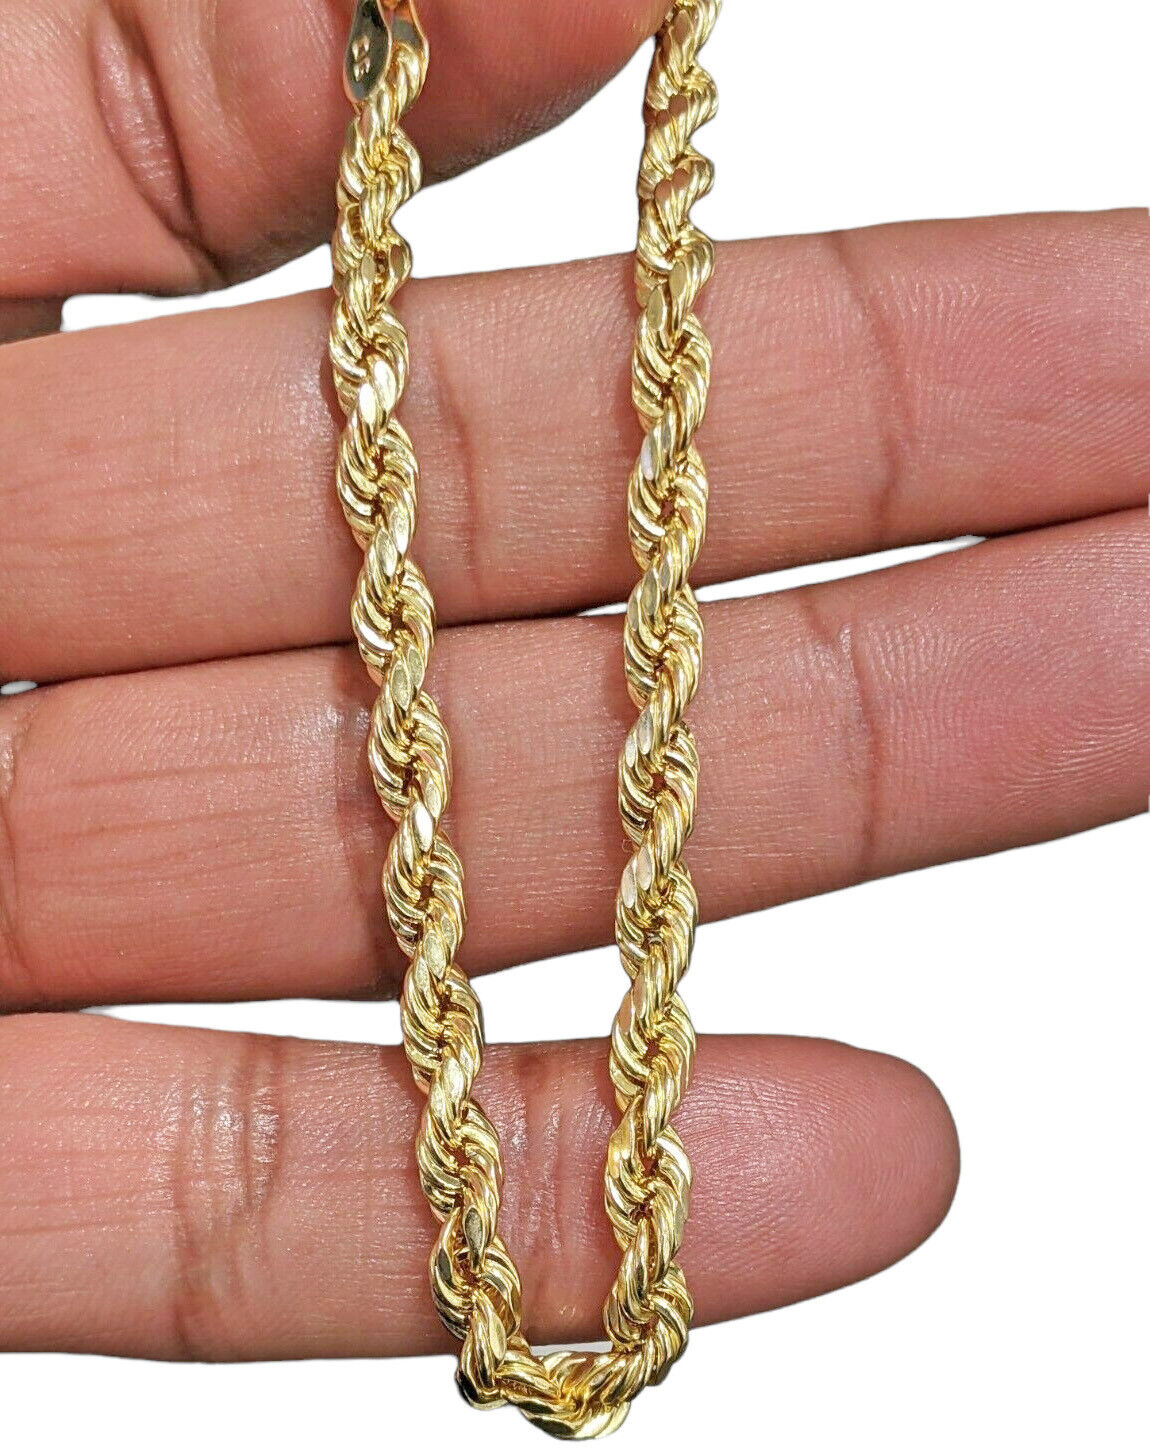 Real 14k Gold Rope chain 24 Inch 4mm Diamond Cuts 14kt Yellow Gold Men Women